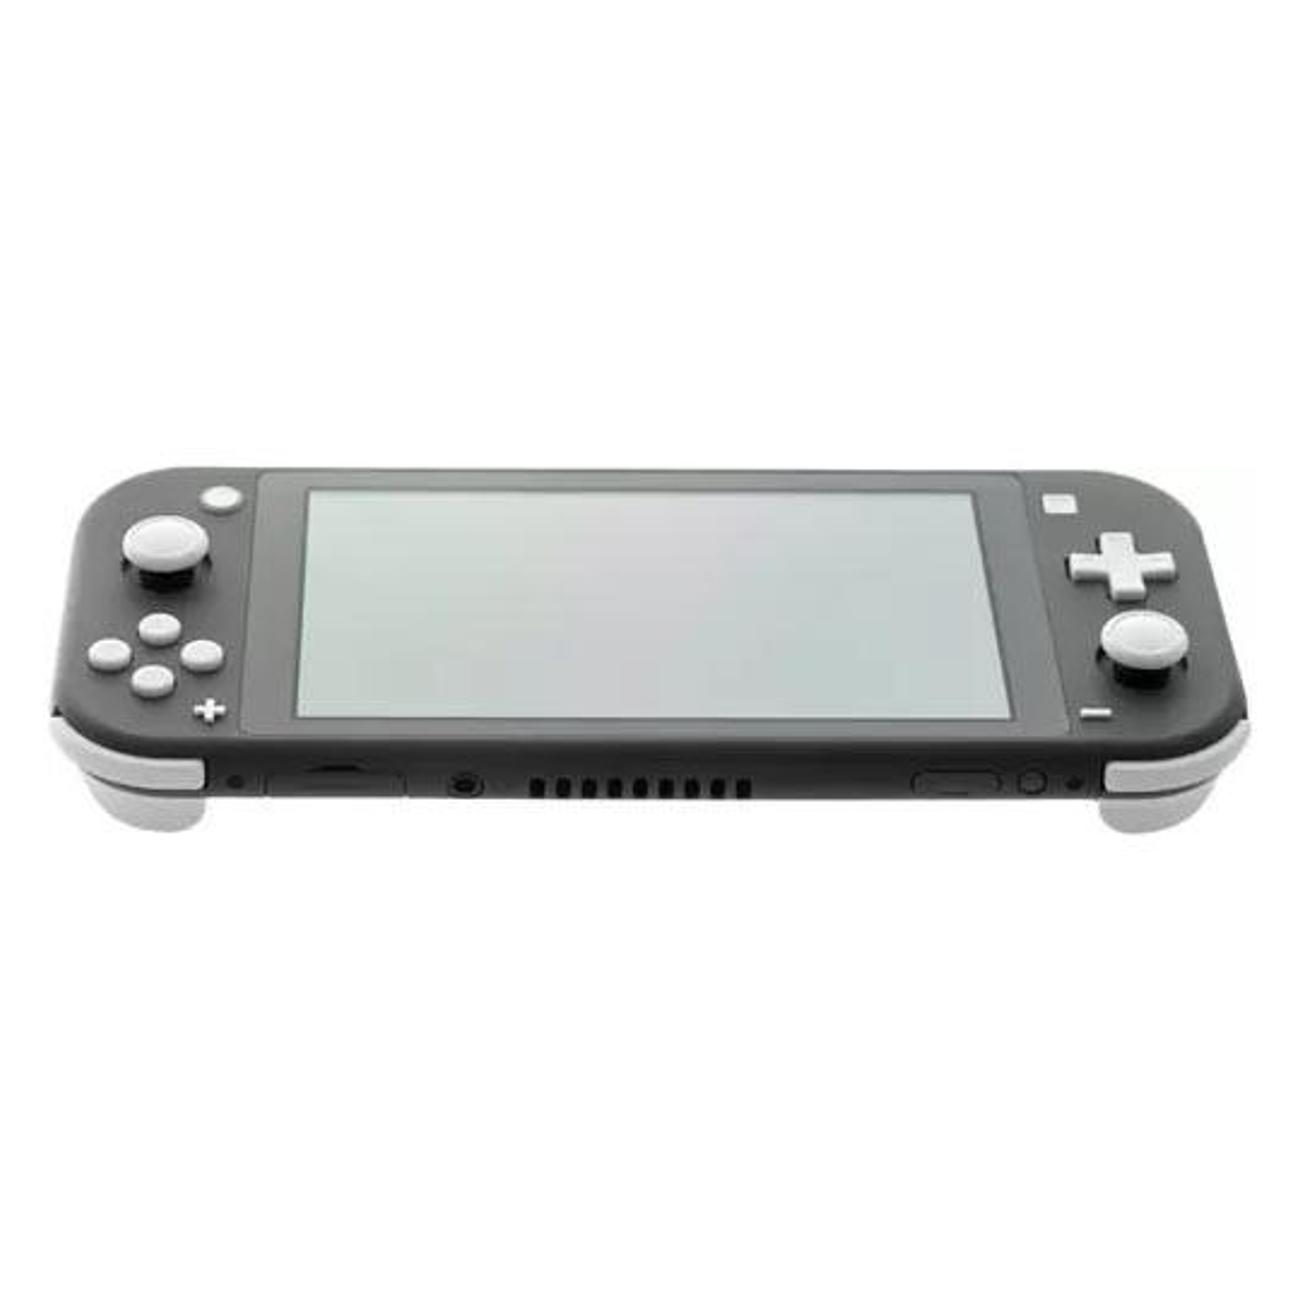 Nintendo 32. Nintendo Switch 32 GB Gray. Switch Lite Gray. Nintendo Switch фото.